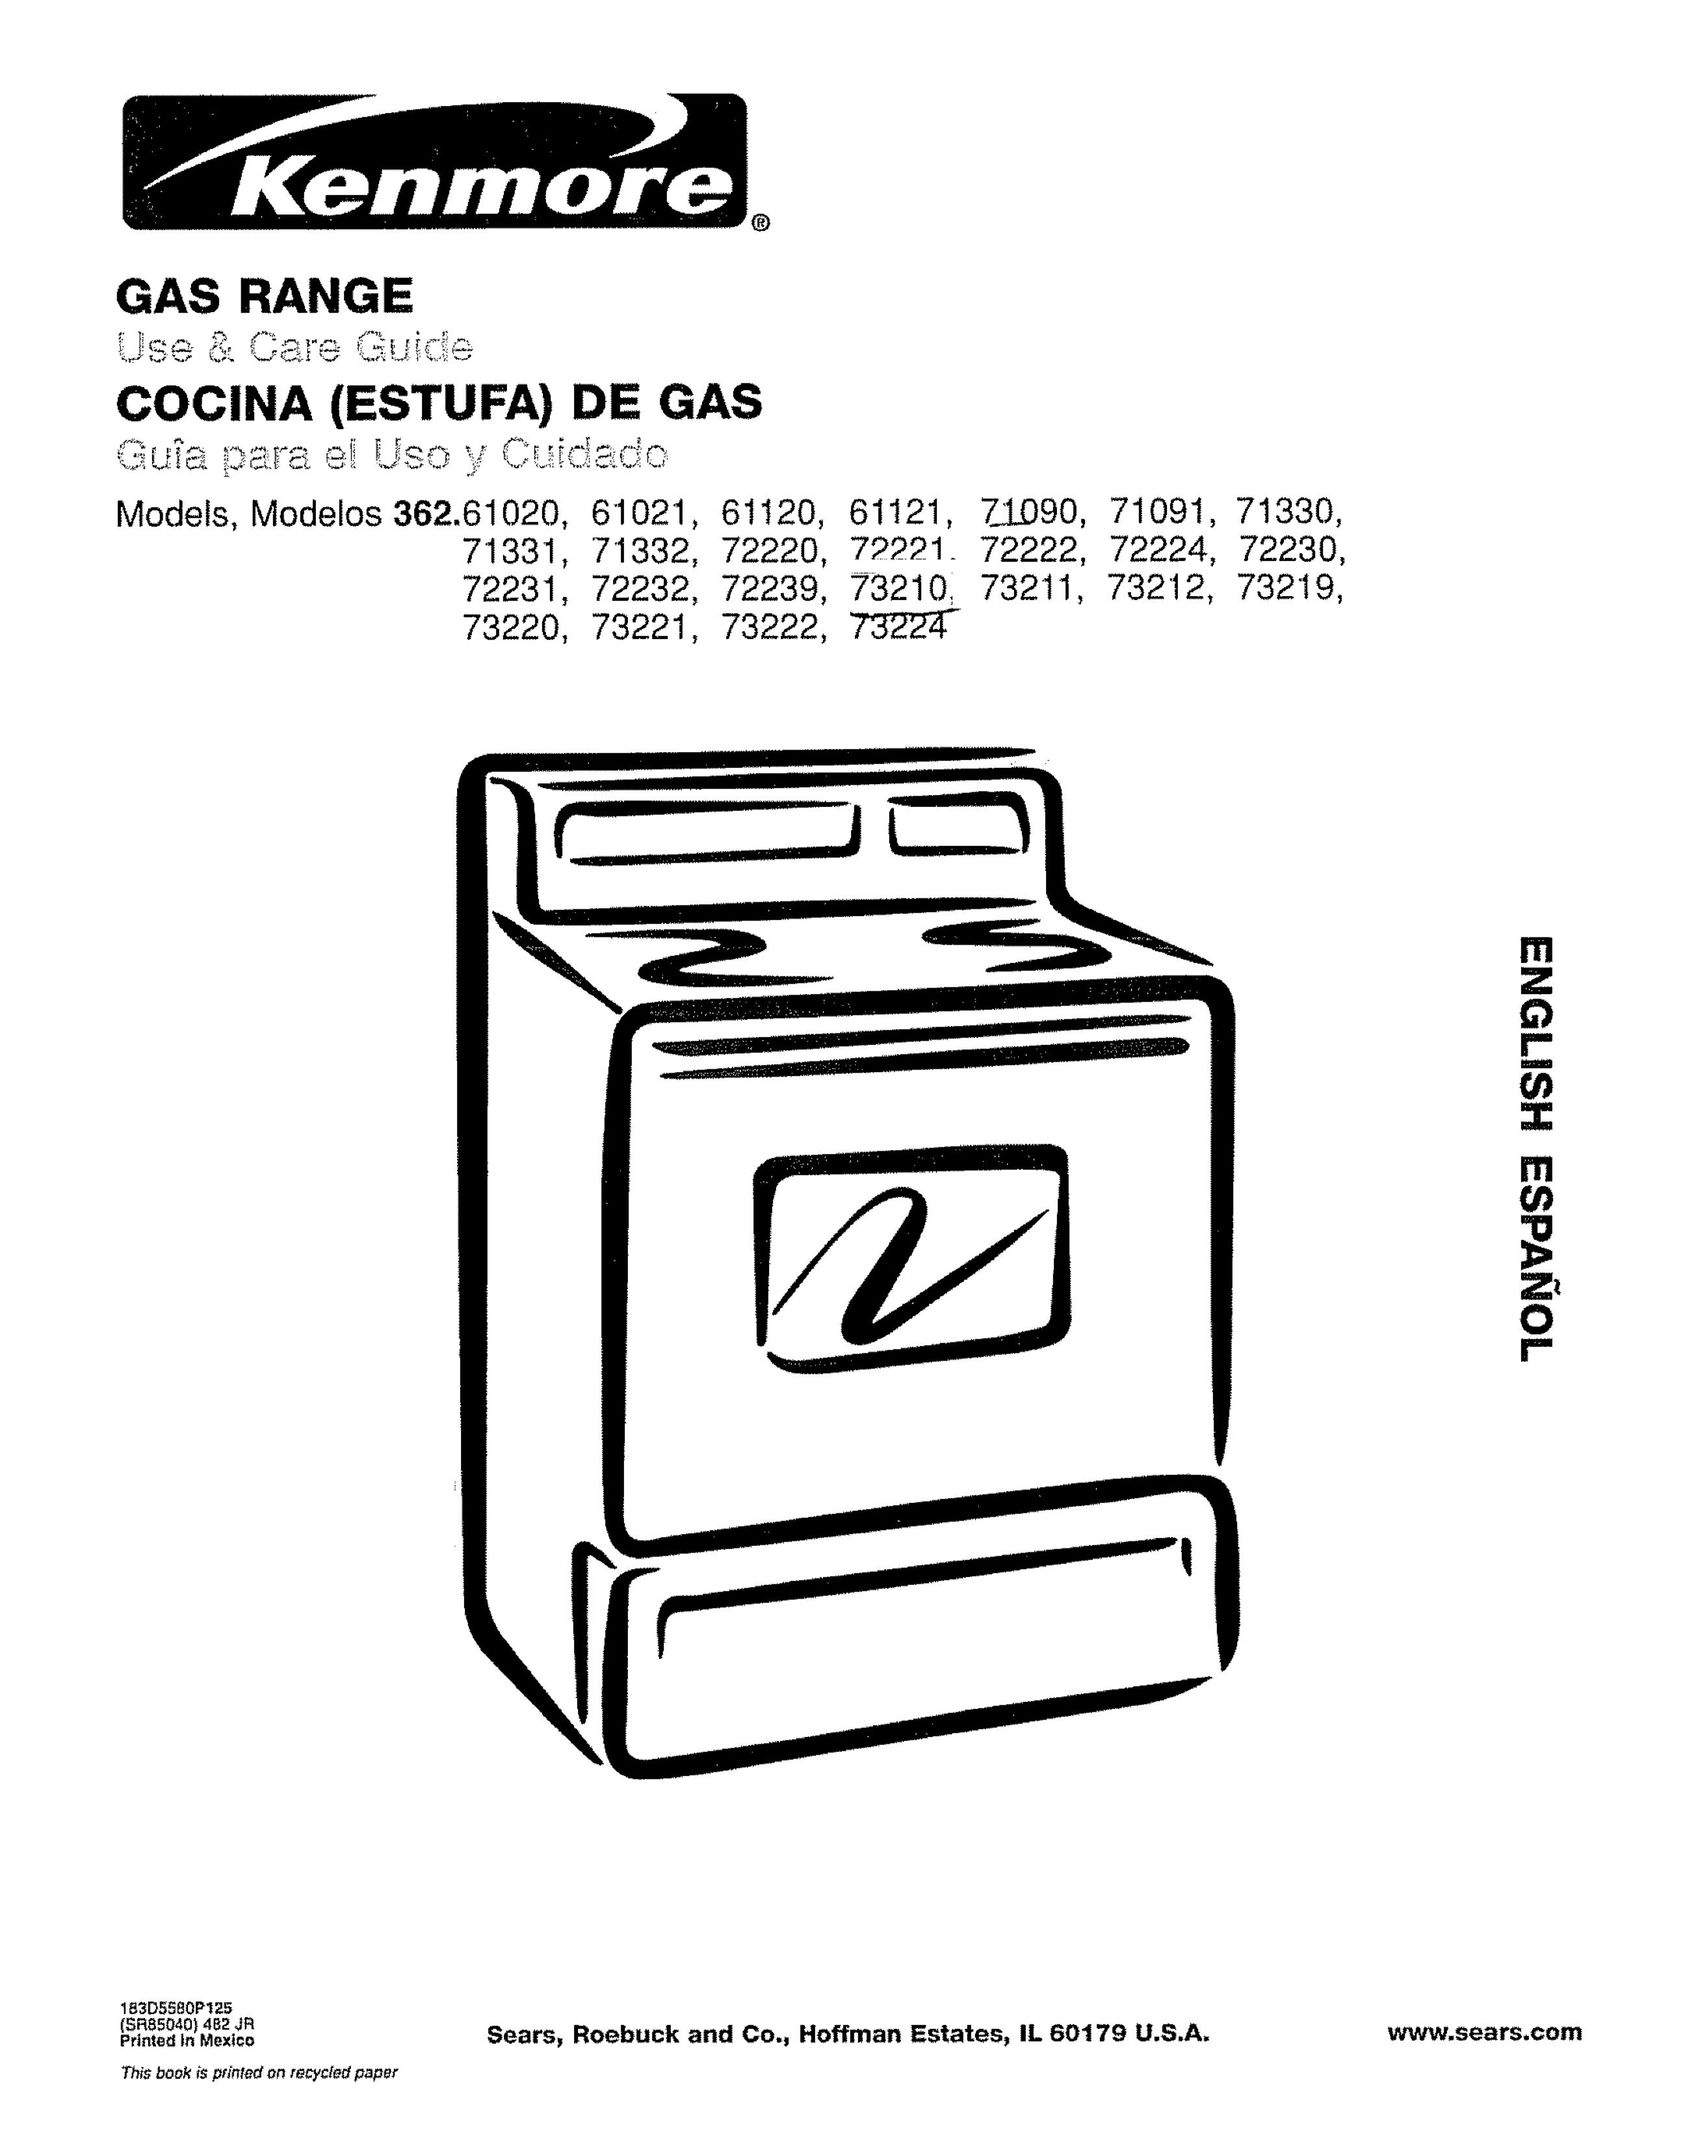 Kenmore 362.72221 Range User Manual